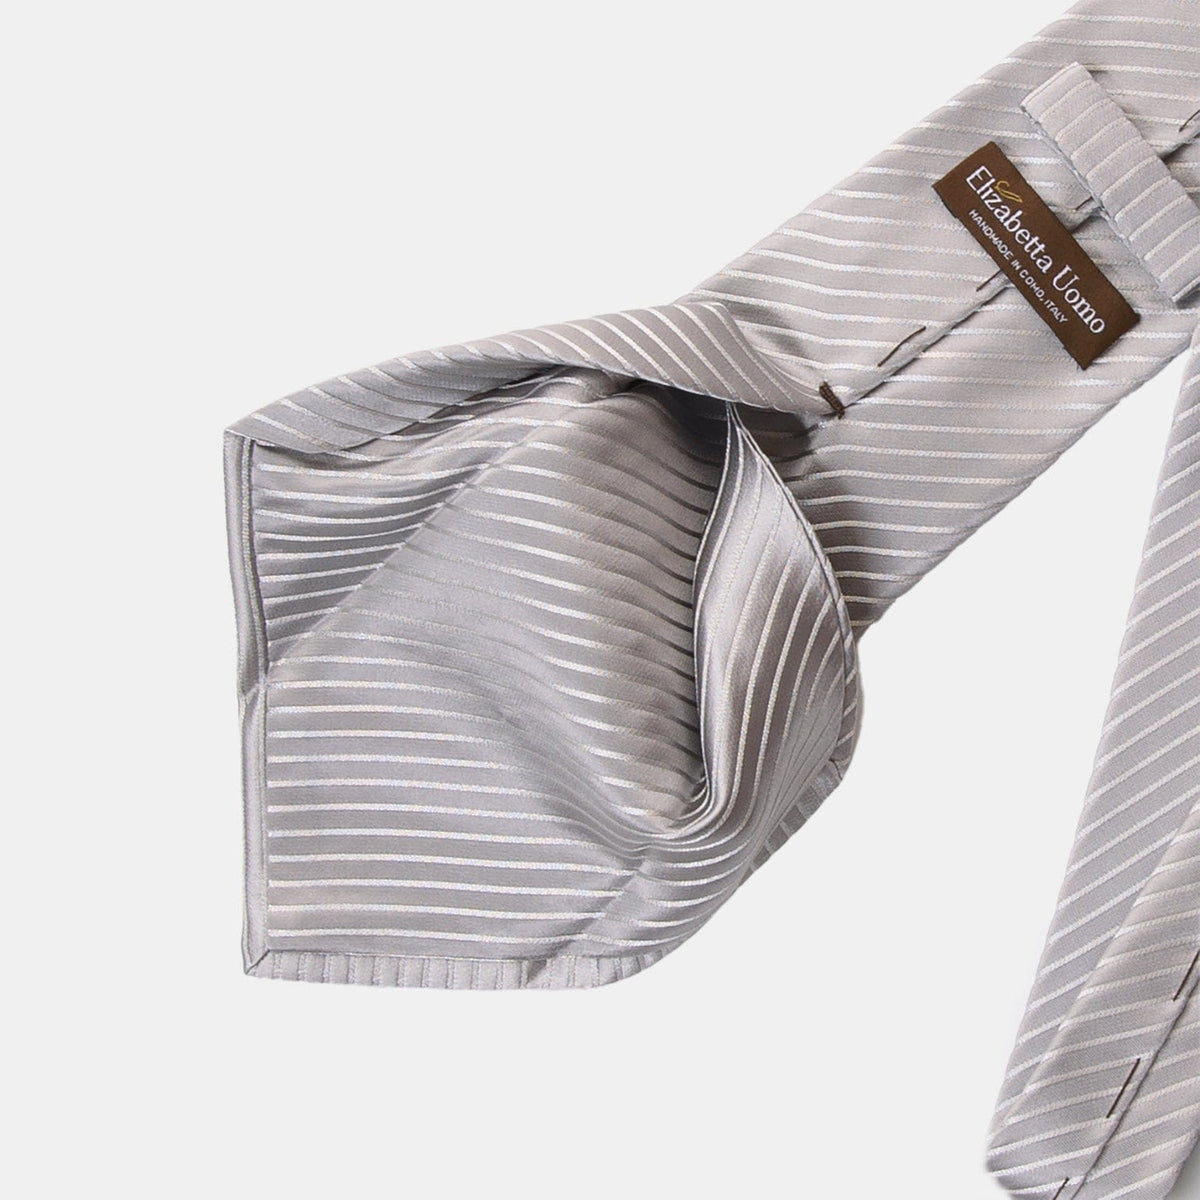 Italian Silk Tie - Formal Silver Striped